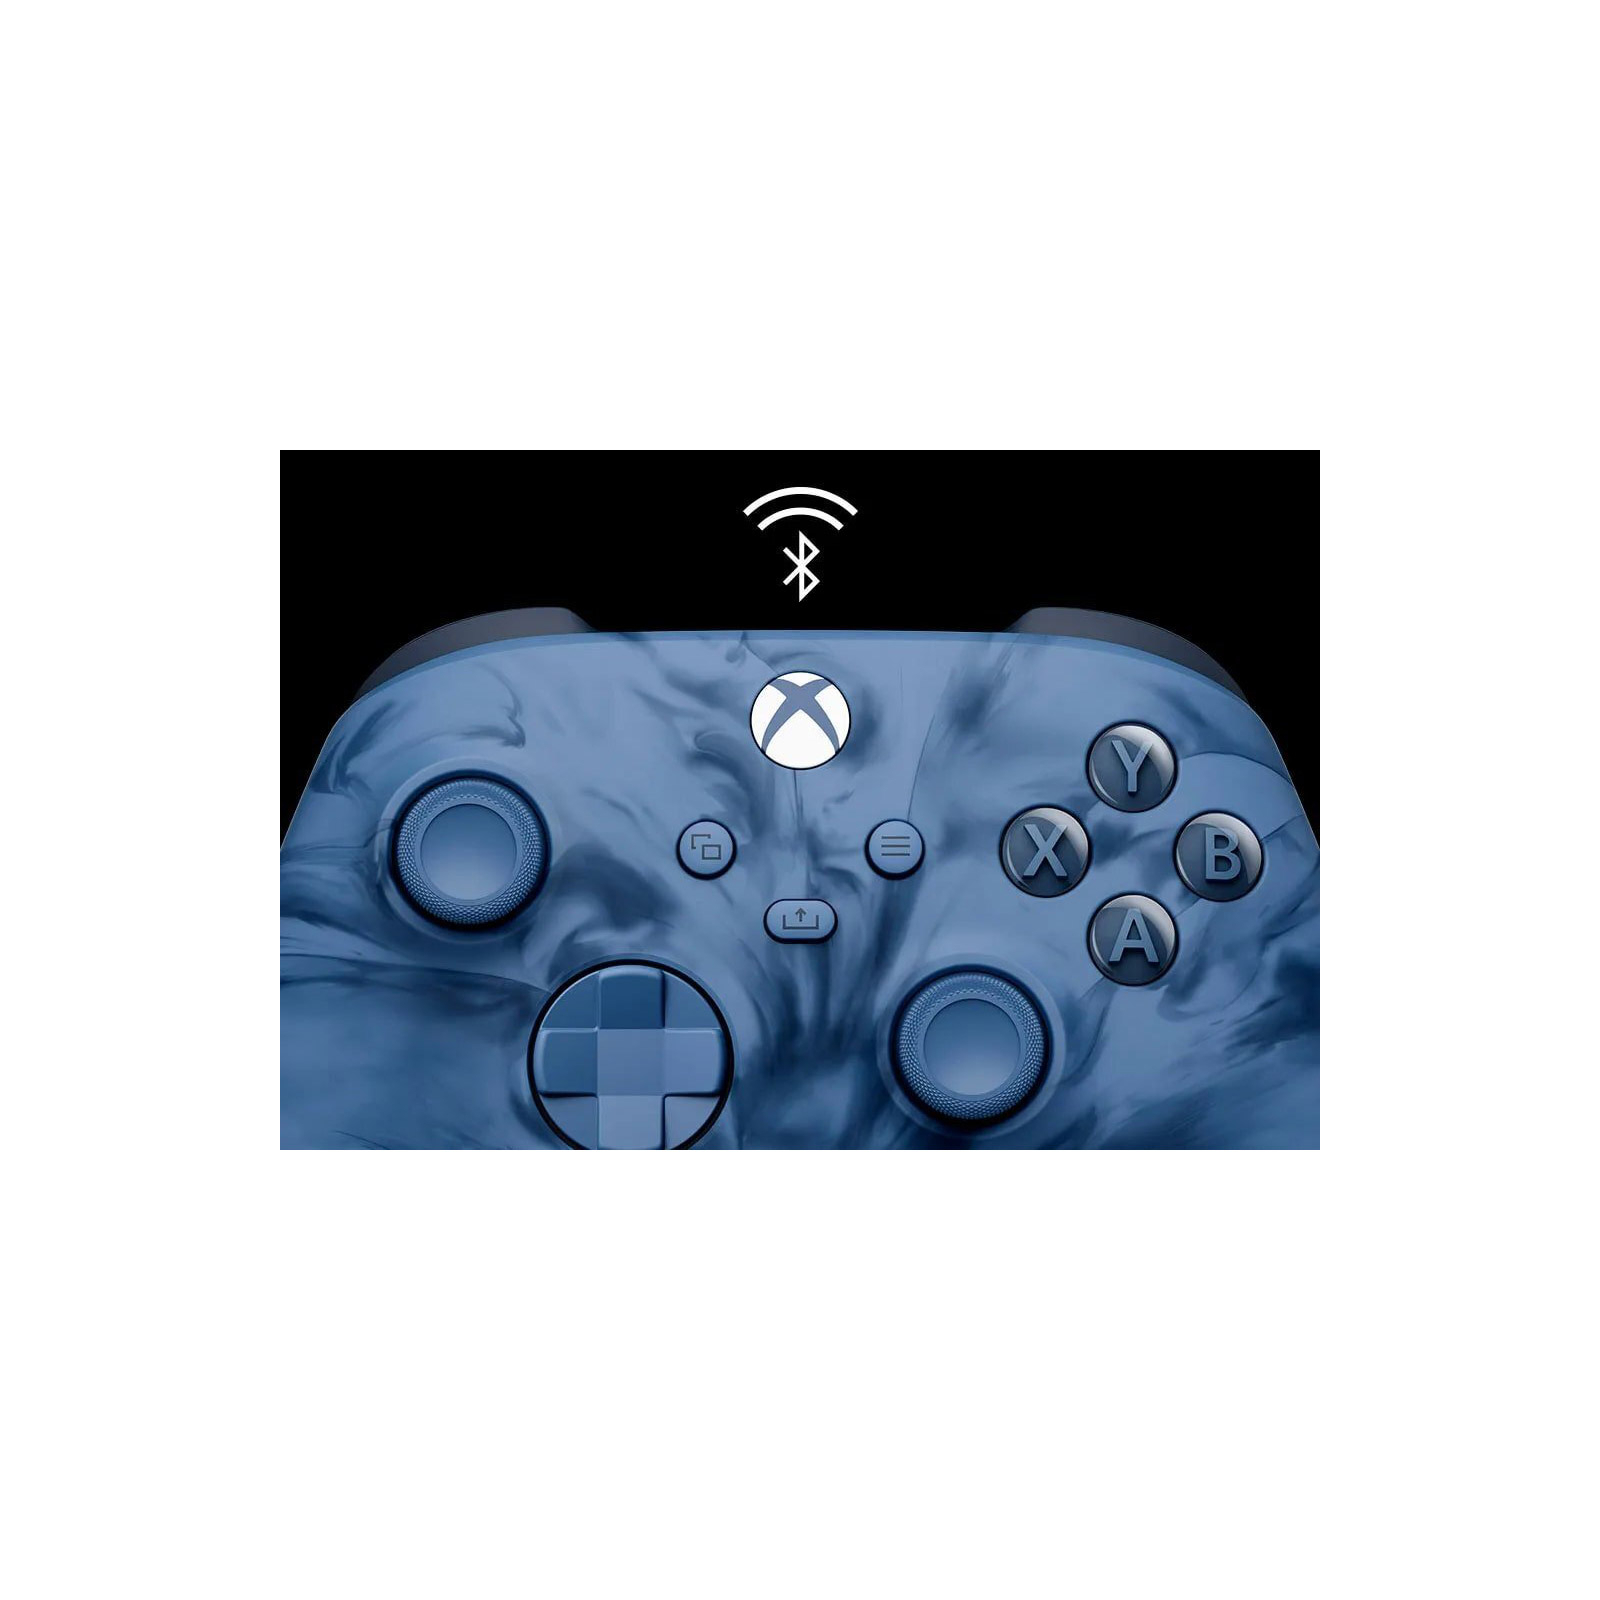 Геймпад Microsoft Xbox Wireless Controller Stormcloud Vapor (QAU-00130) изображение 5